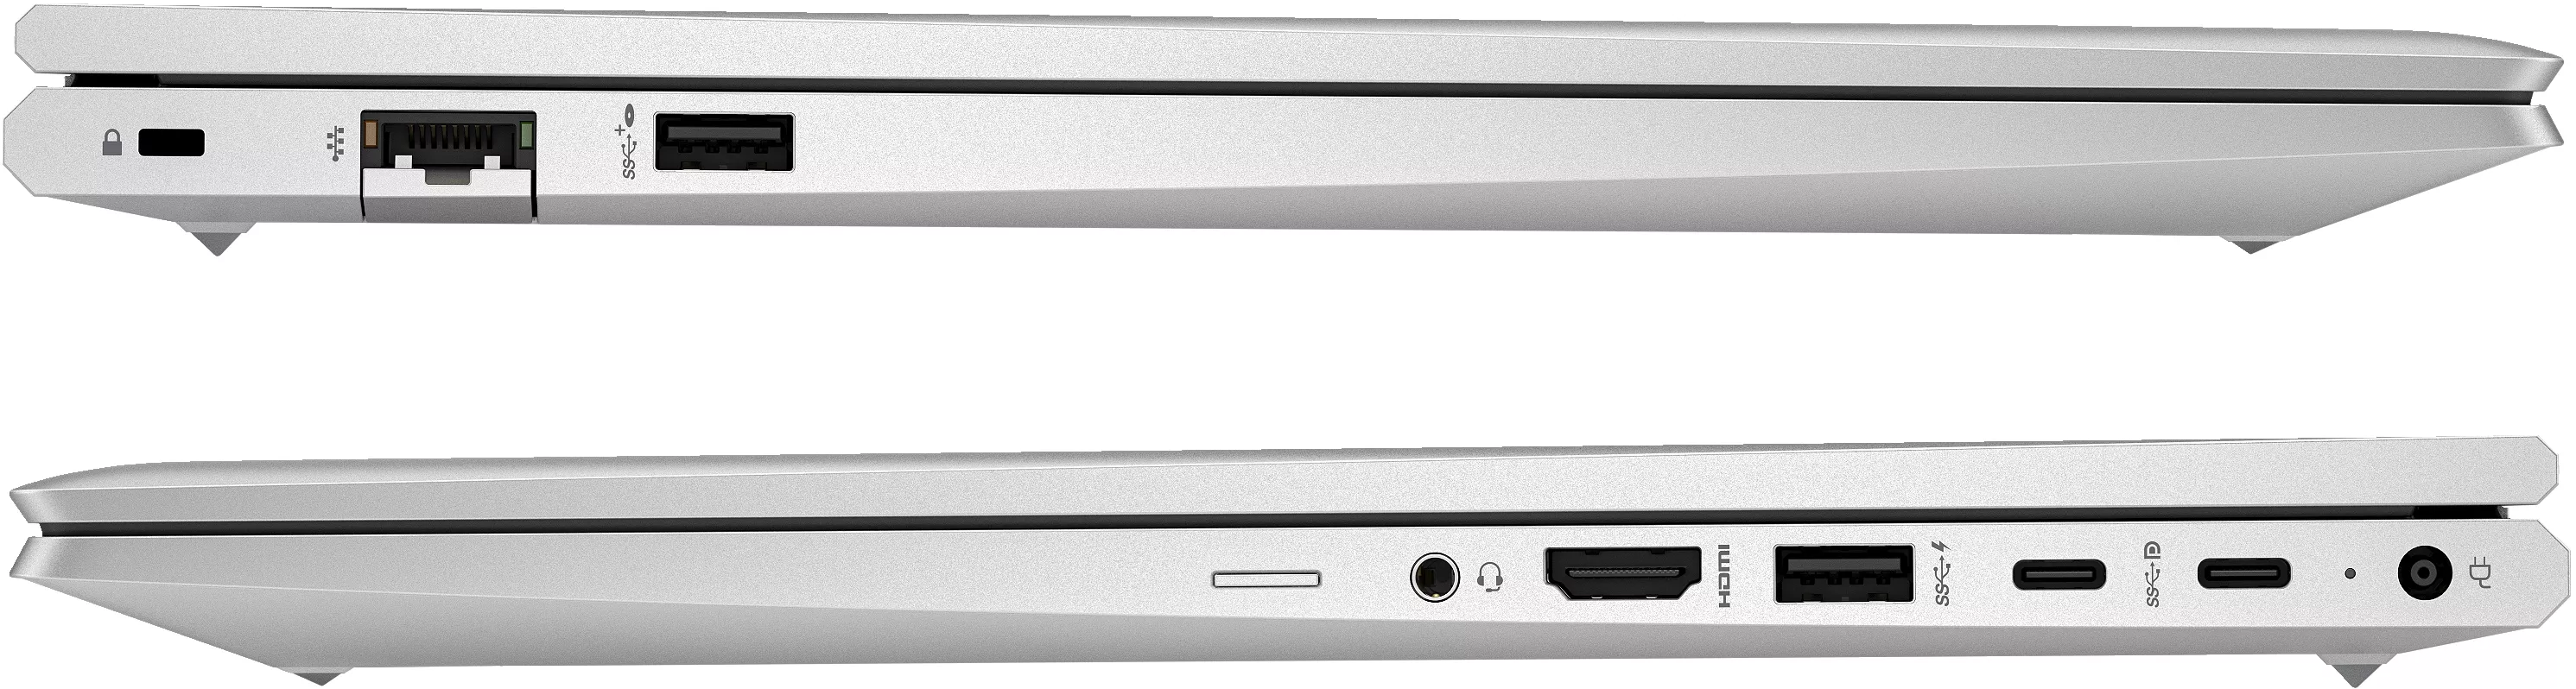 Vente HP ProBook 450 15.6 G10 HP au meilleur prix - visuel 8